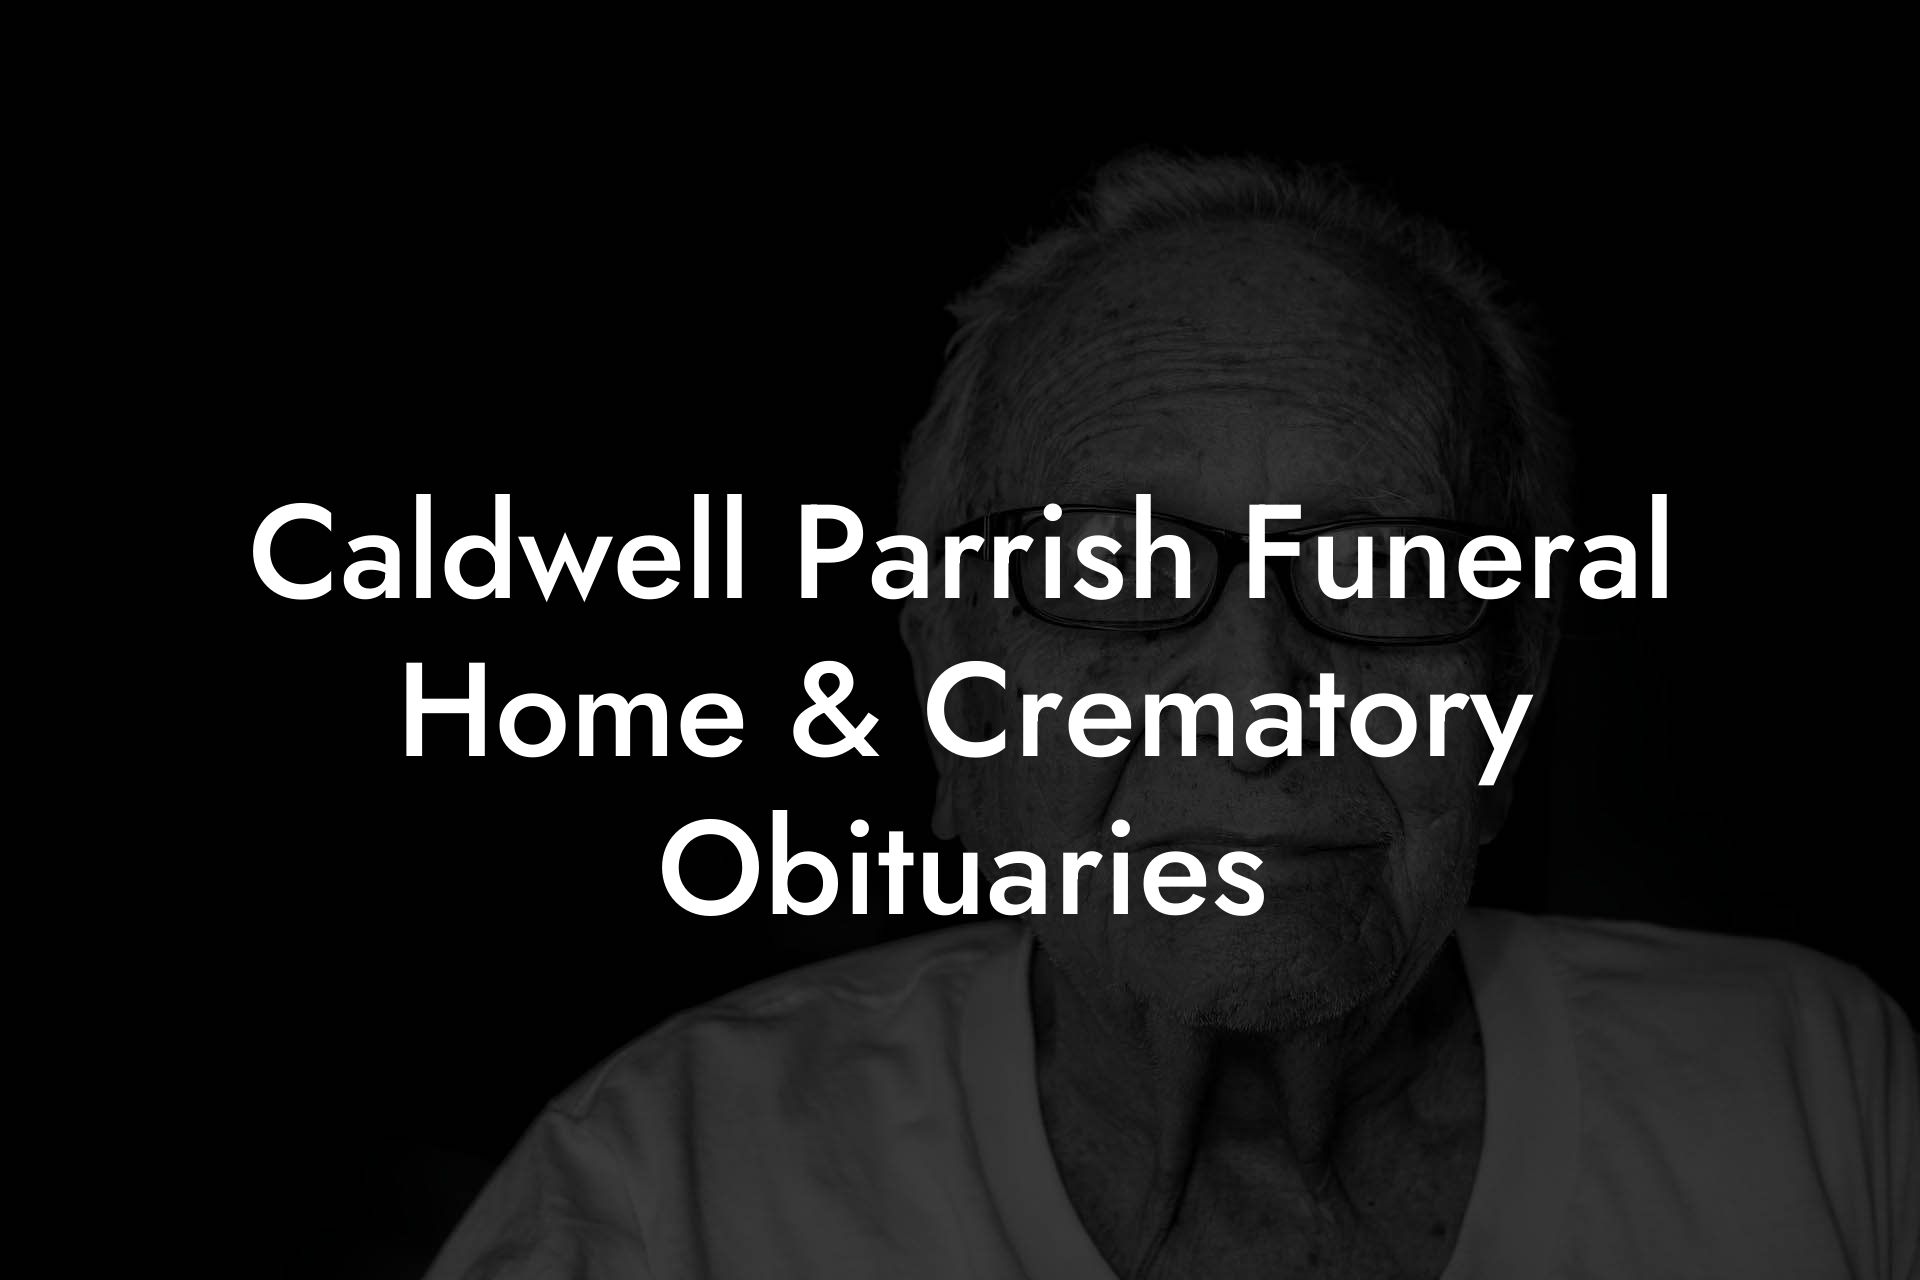 Caldwell Parrish Funeral Home & Crematory Obituaries